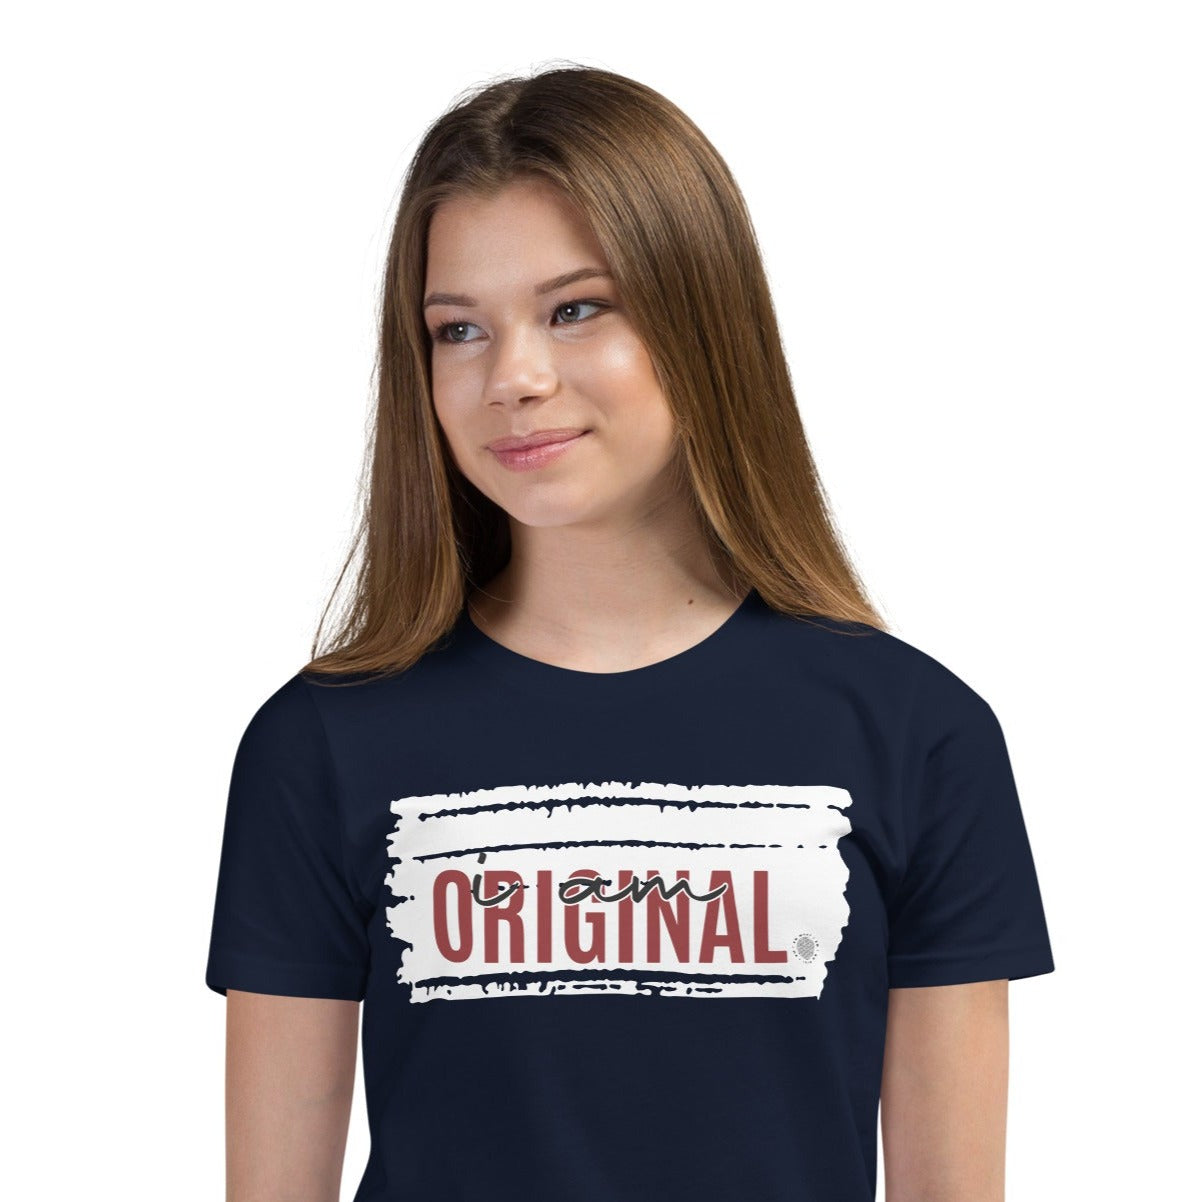 I Am Original Youth T-Shirt navy